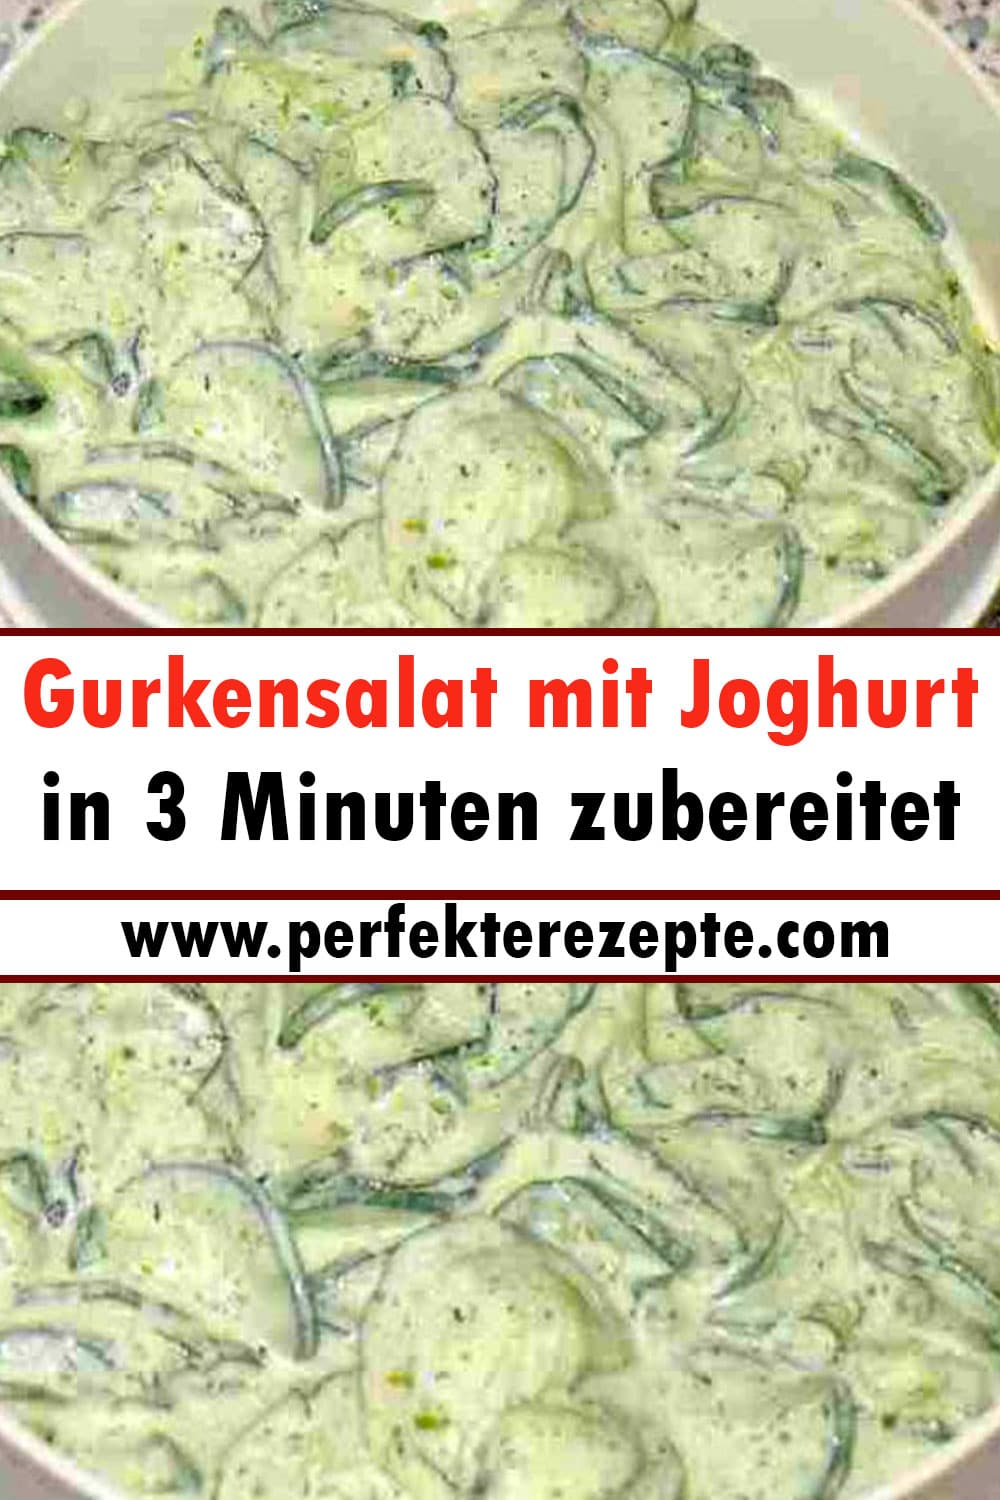 Gurkensalat mit Joghurt Rezept in 3 Minuten zubereitet